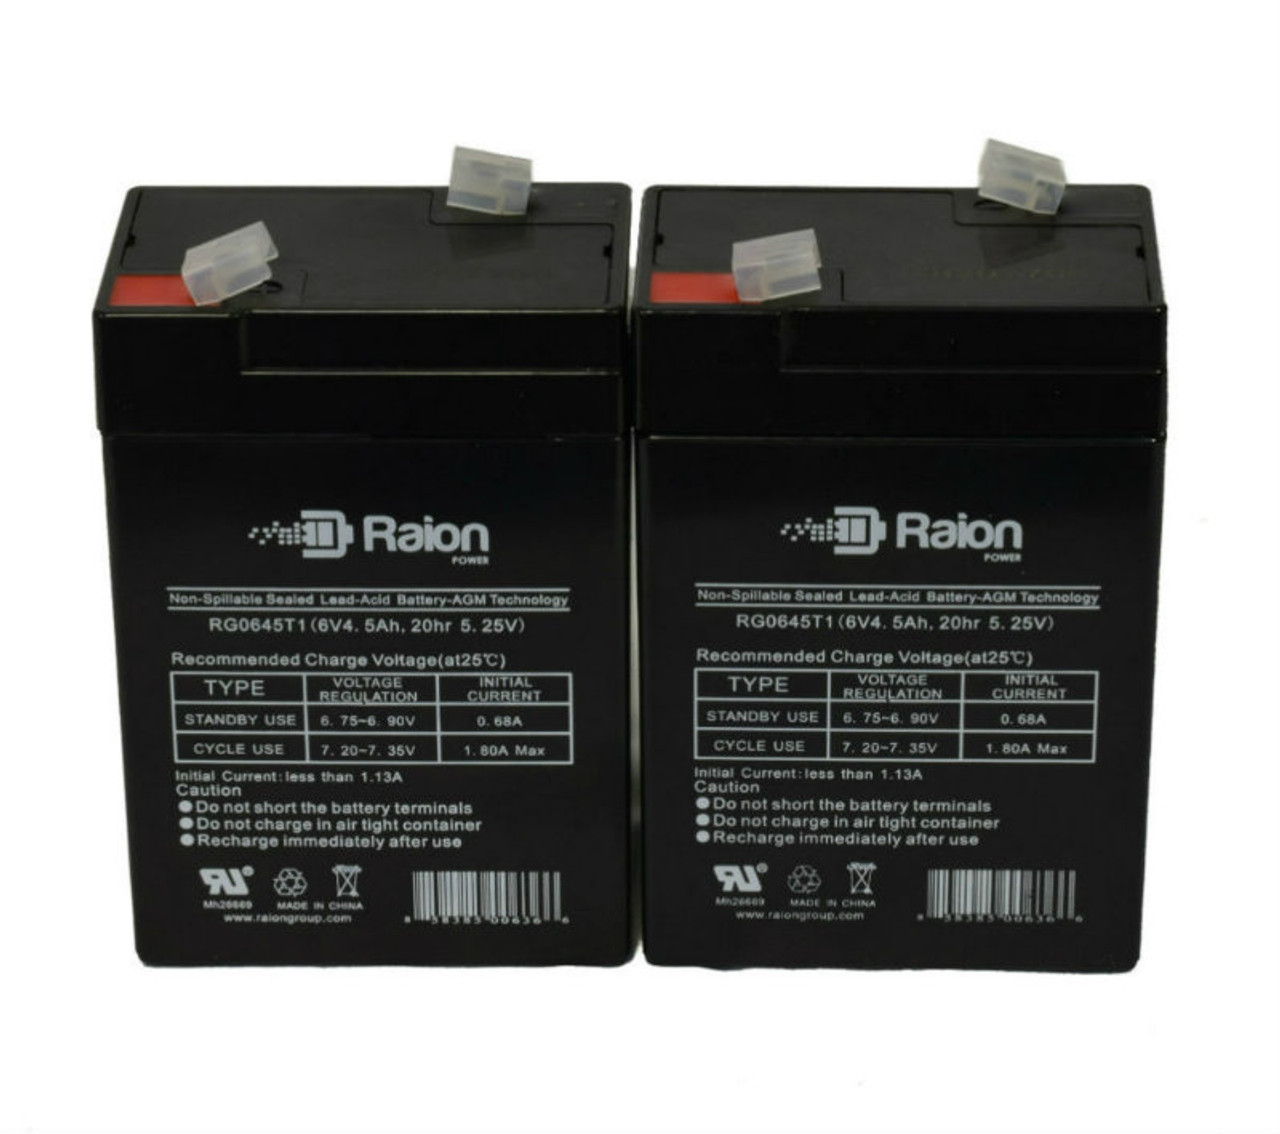 Raion Power 6 Volt 4.5Ah RG0645T1 Replacement Battery for Sonnenschein 6V4.6AH - 2 Pack